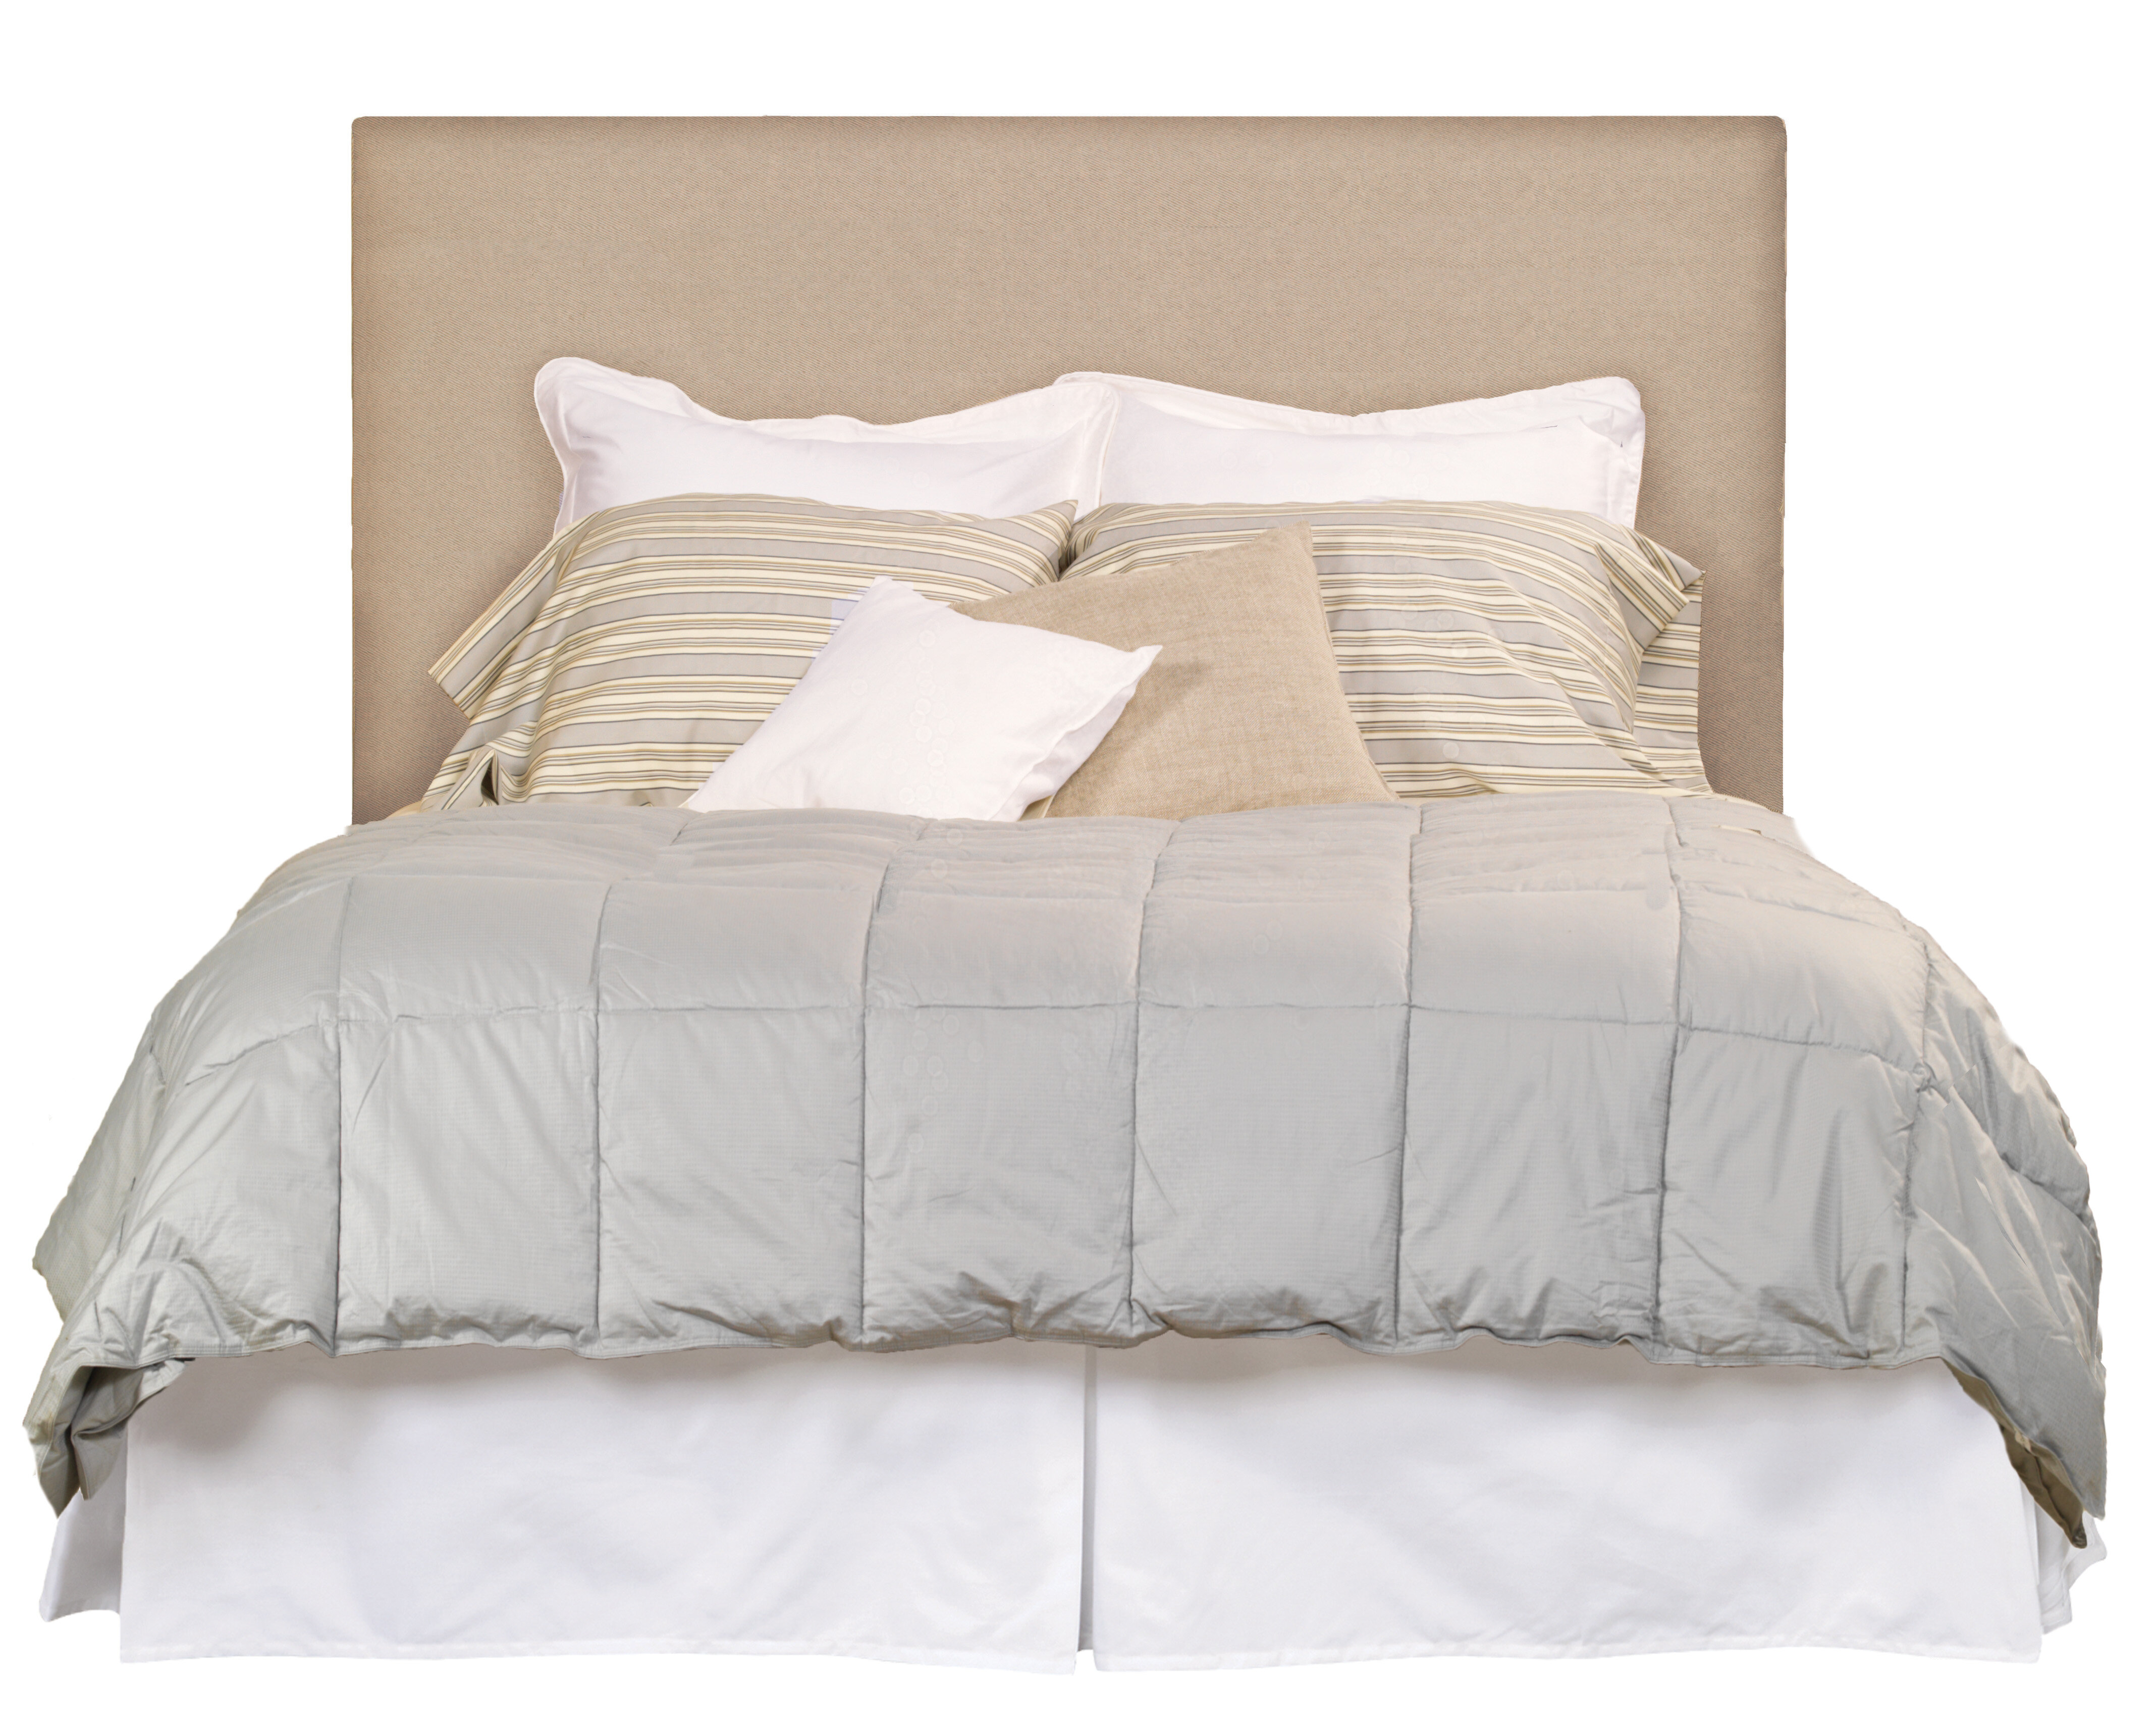 ADELLE COASTAL  Custom Upholstered Freestanding Beds